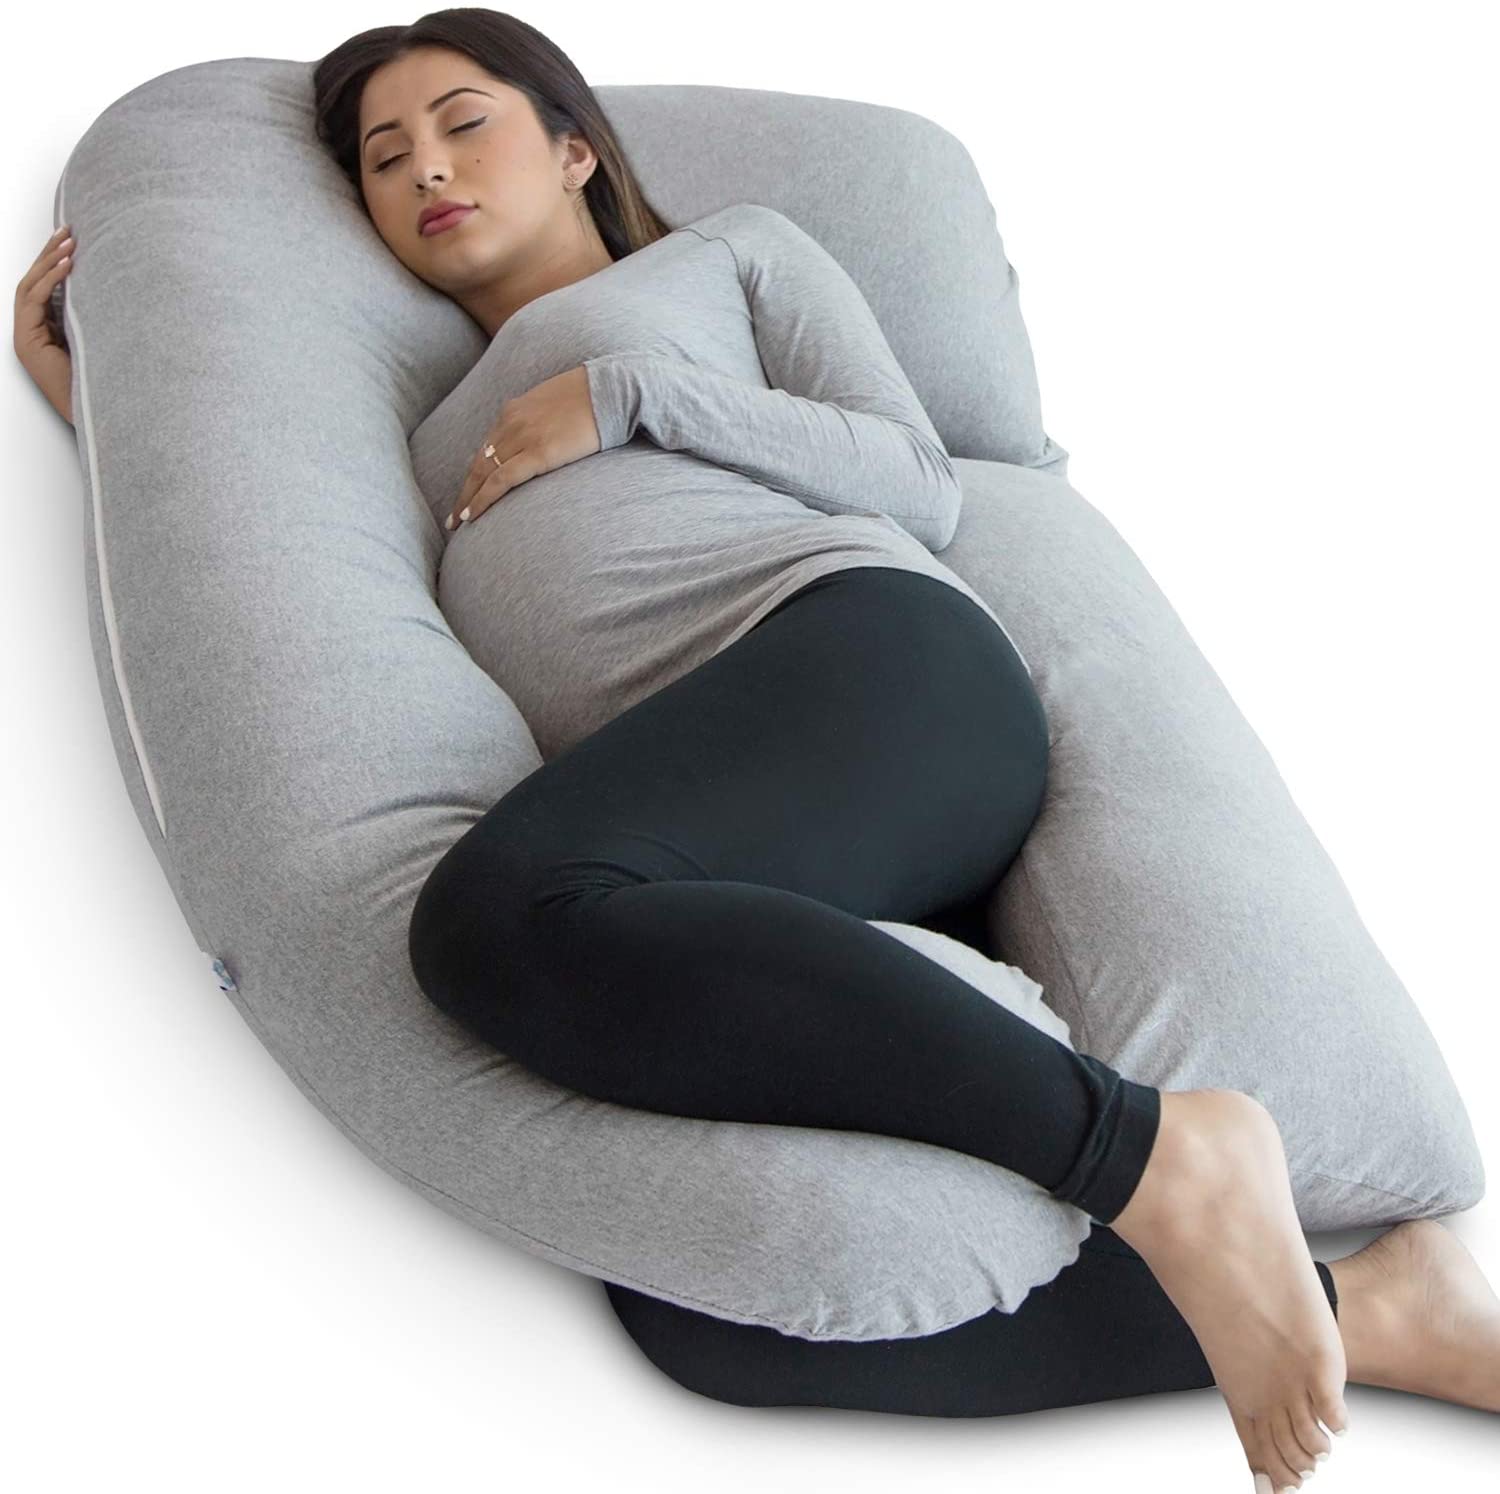 PharMeDoc Detachable Extension Pregnancy Pillow